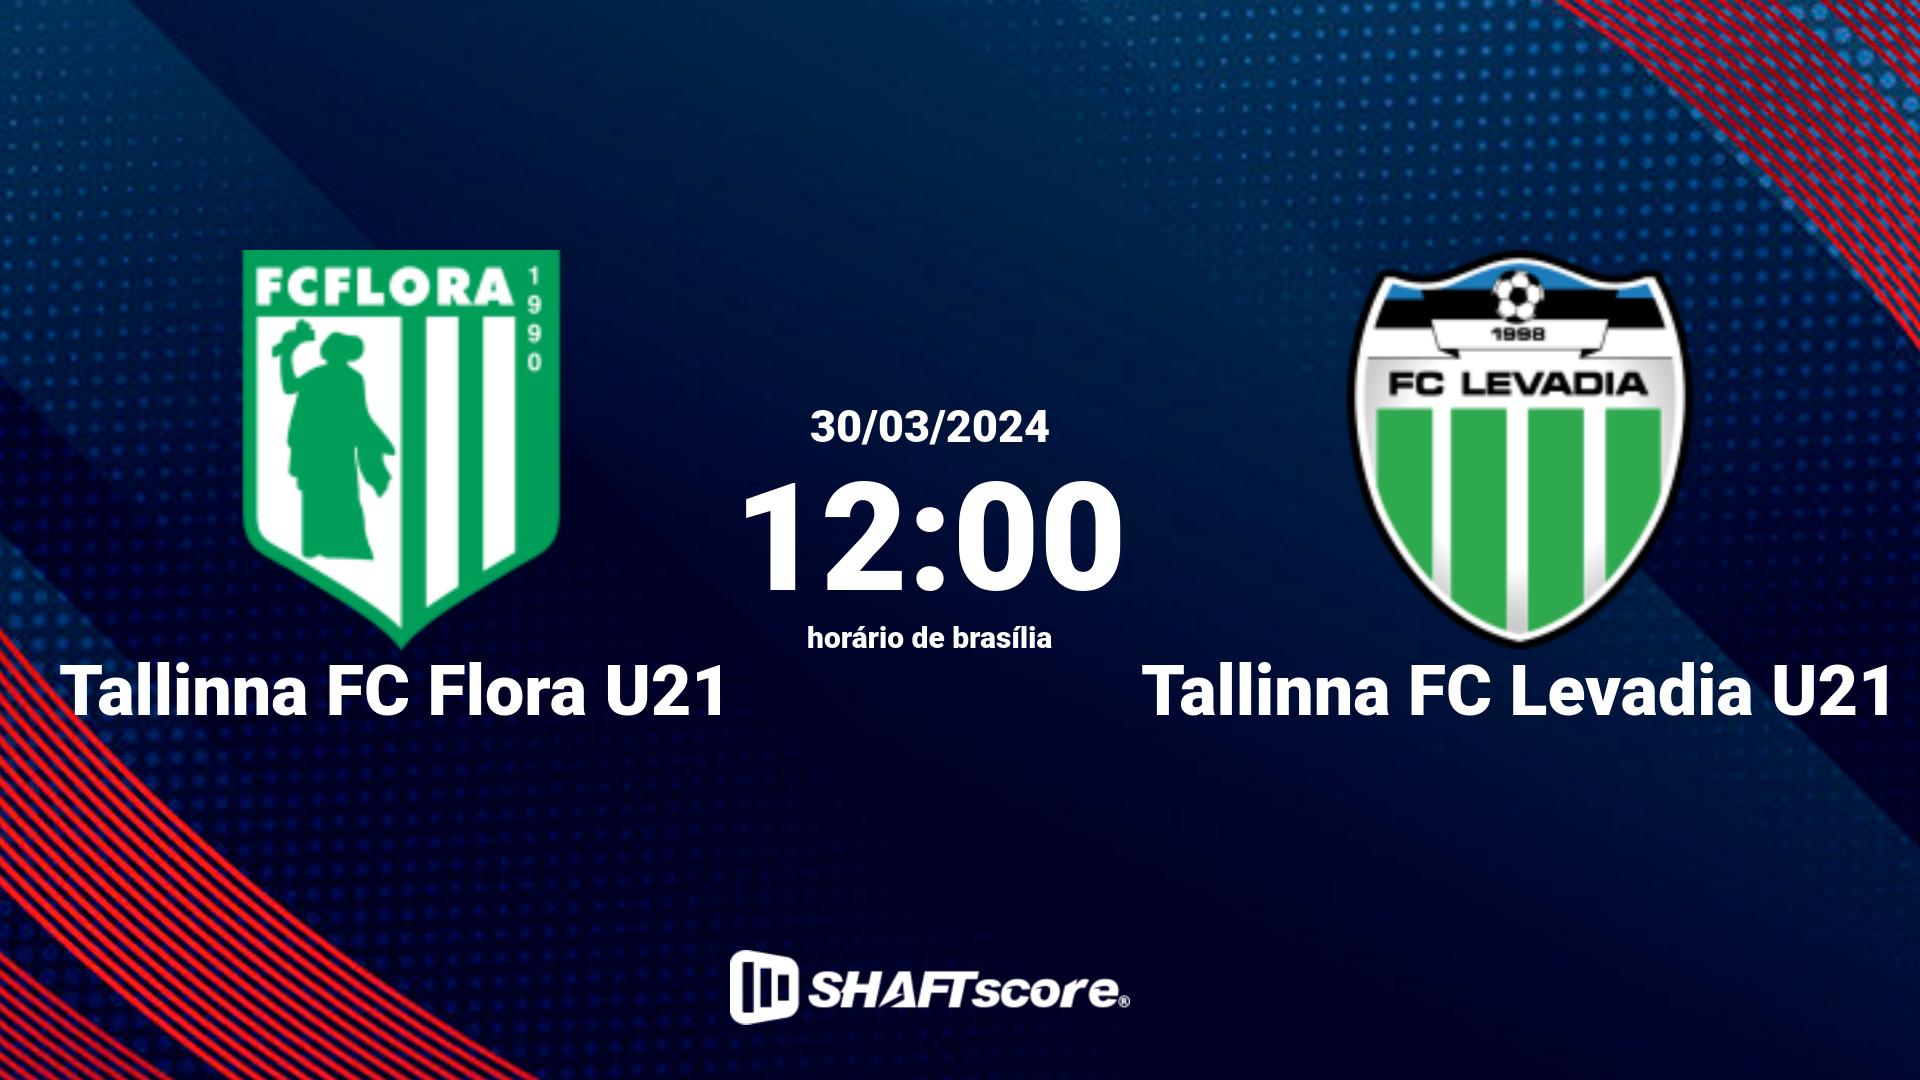 Estatísticas do jogo Tallinna FC Flora U21 vs Tallinna FC Levadia U21 30.03 12:00